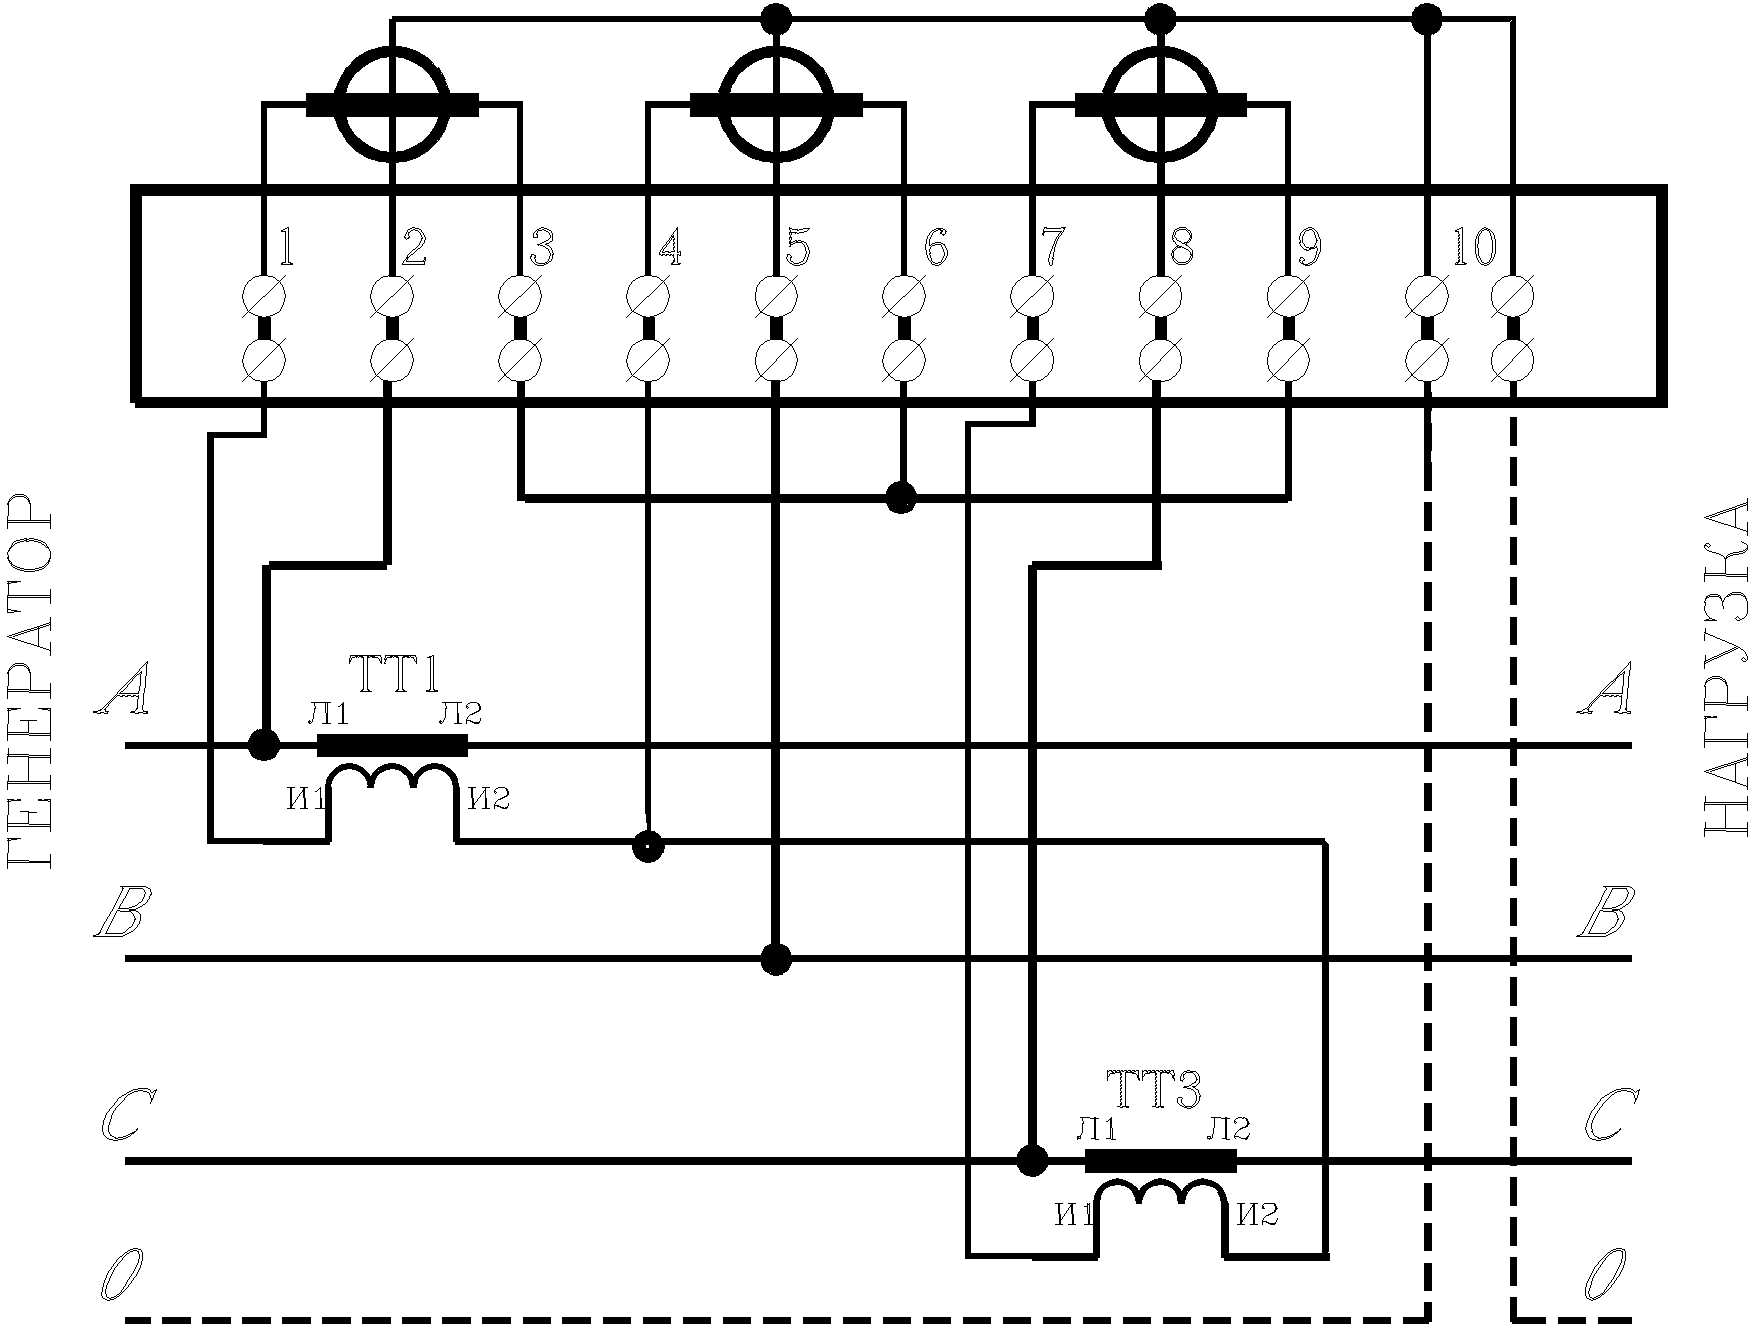 Схема подключения трехфазного счетчика через трансформаторы тока. Схема подключения счетчика через 2 трансформатора тока. Схема подключения счетчика через трансформаторы тока 0.4кв. Схема соединения 3х фазного счетчика с трансформаторами тока. Трехфазные счетчики через трансформаторы тока